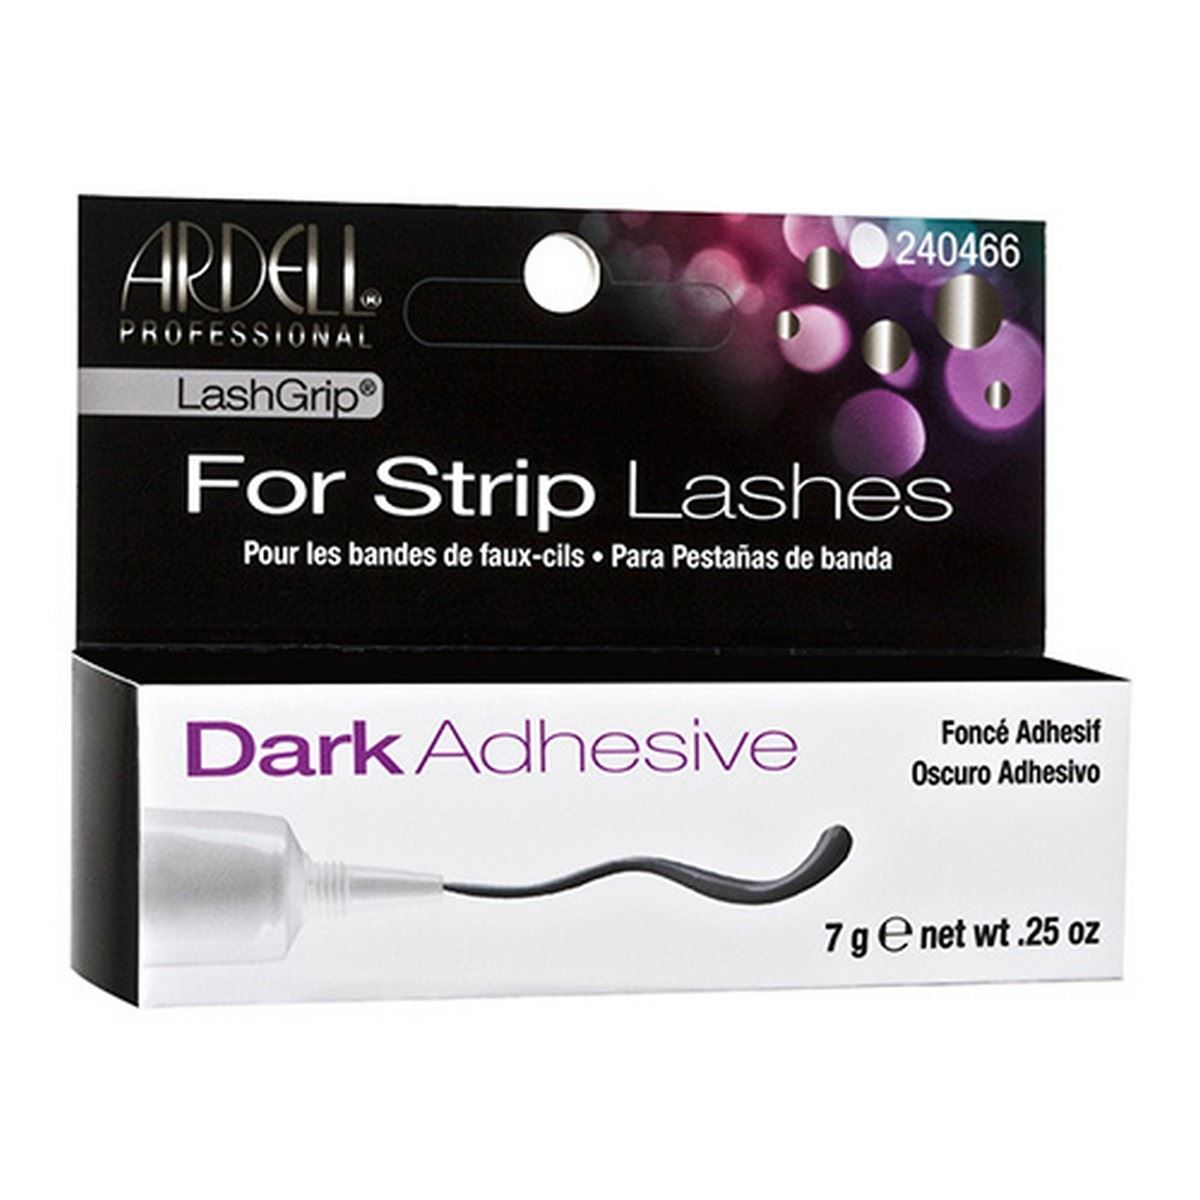 Ardell LashGrip Strip Adhesive Dark 7g